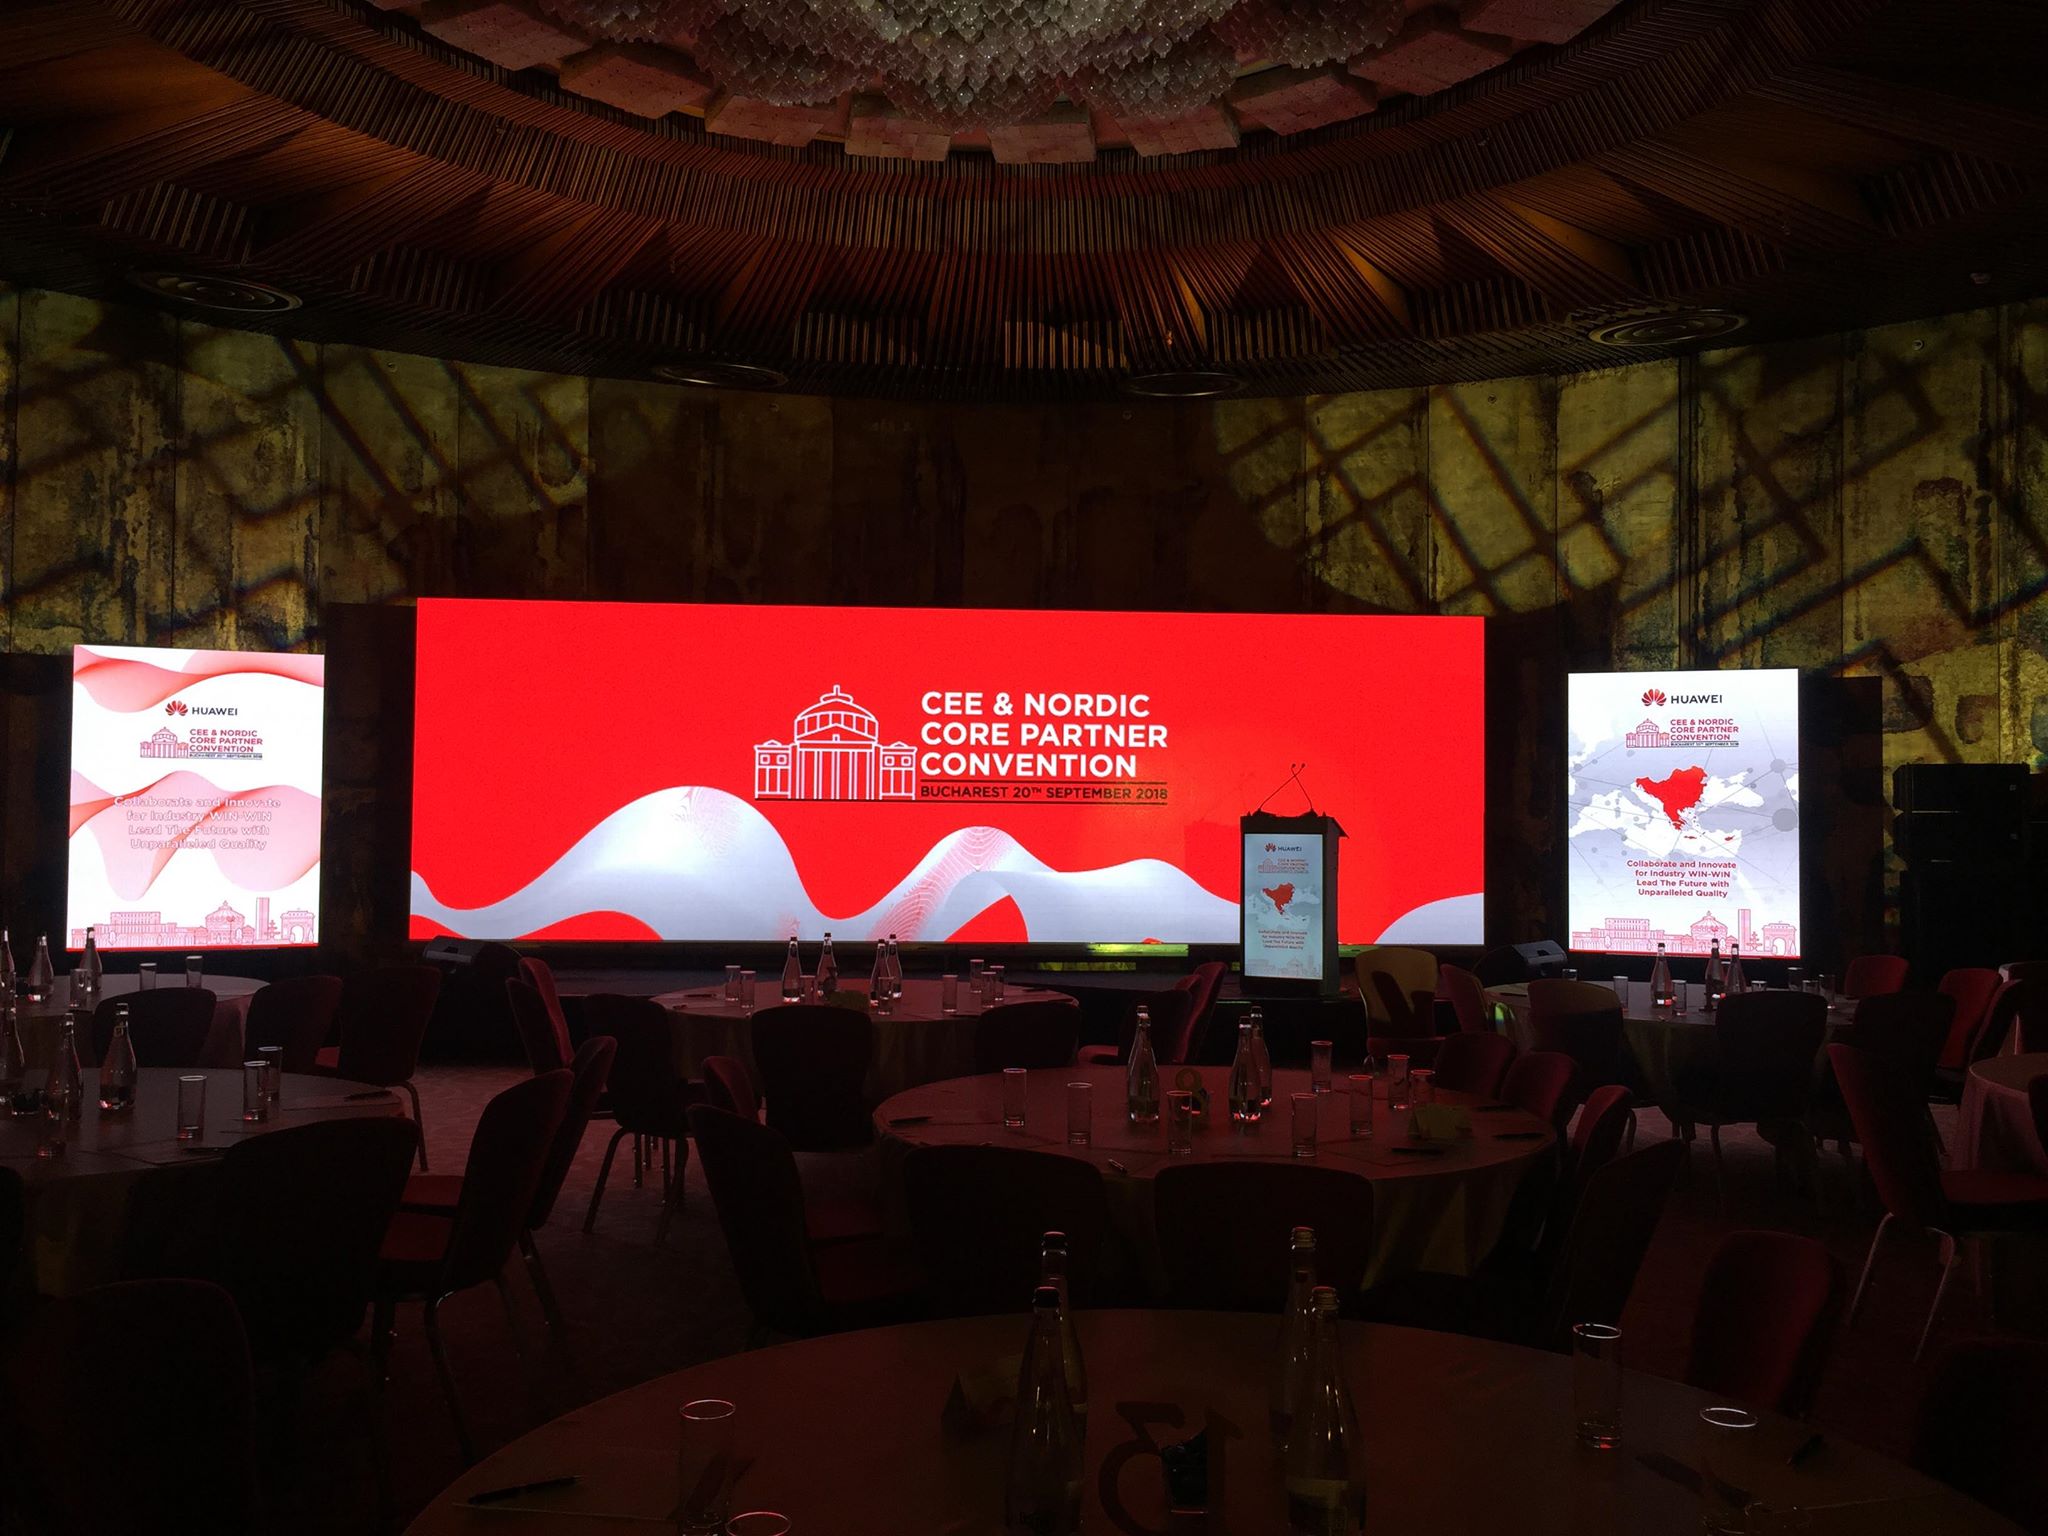 Conferinta Huawei 2018 @ Hotel Intercontinental Setup Scena Lumini Sunet Ecran Led  3